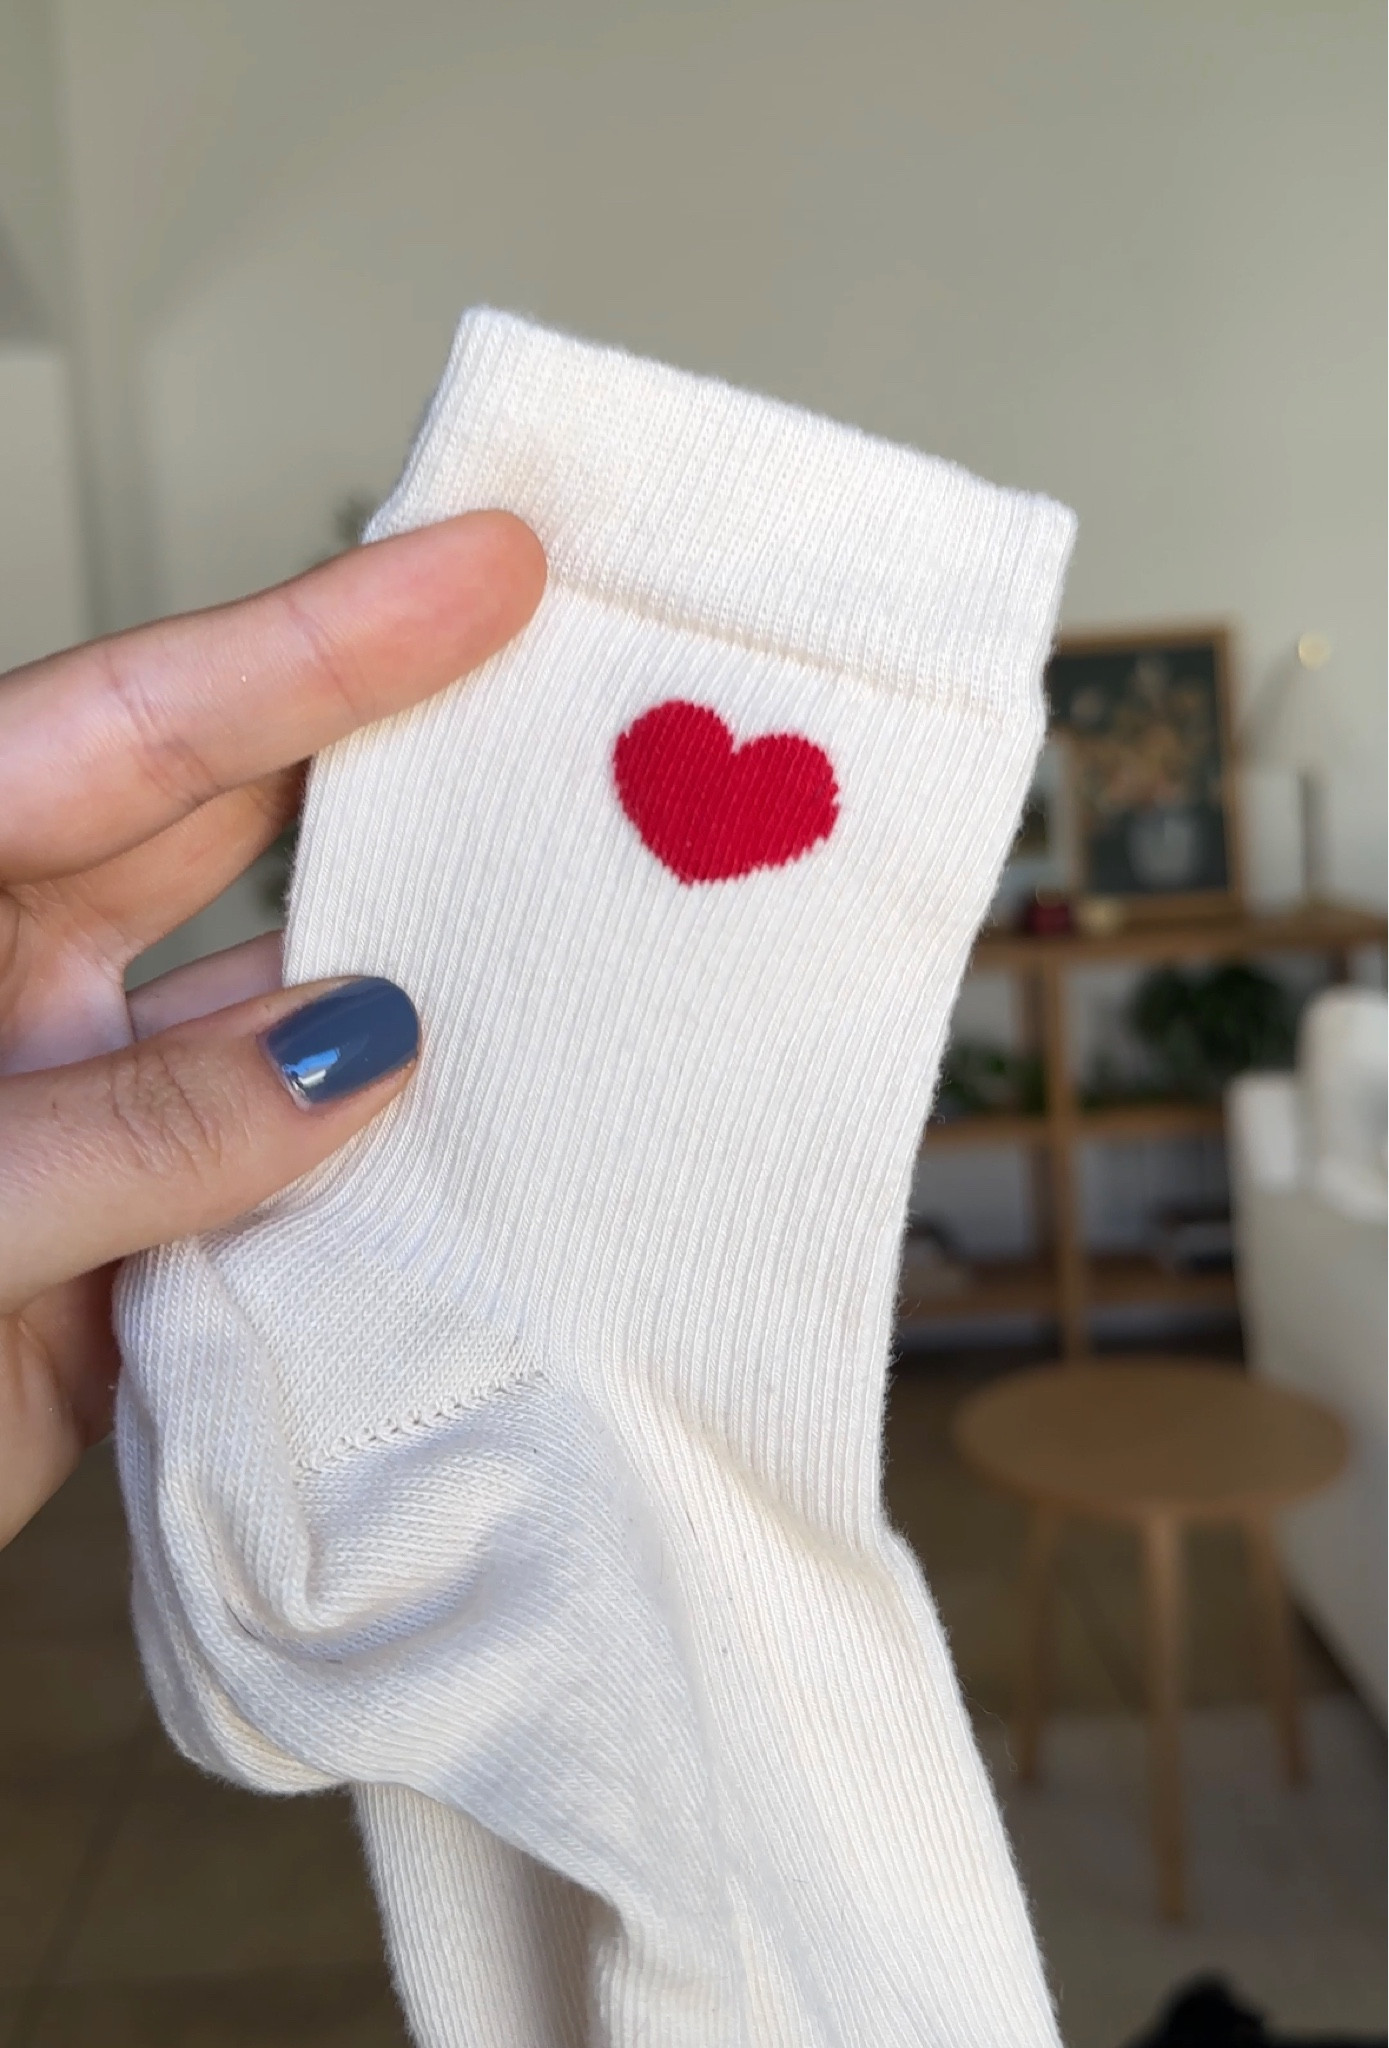 Heart Socks curated on LTK